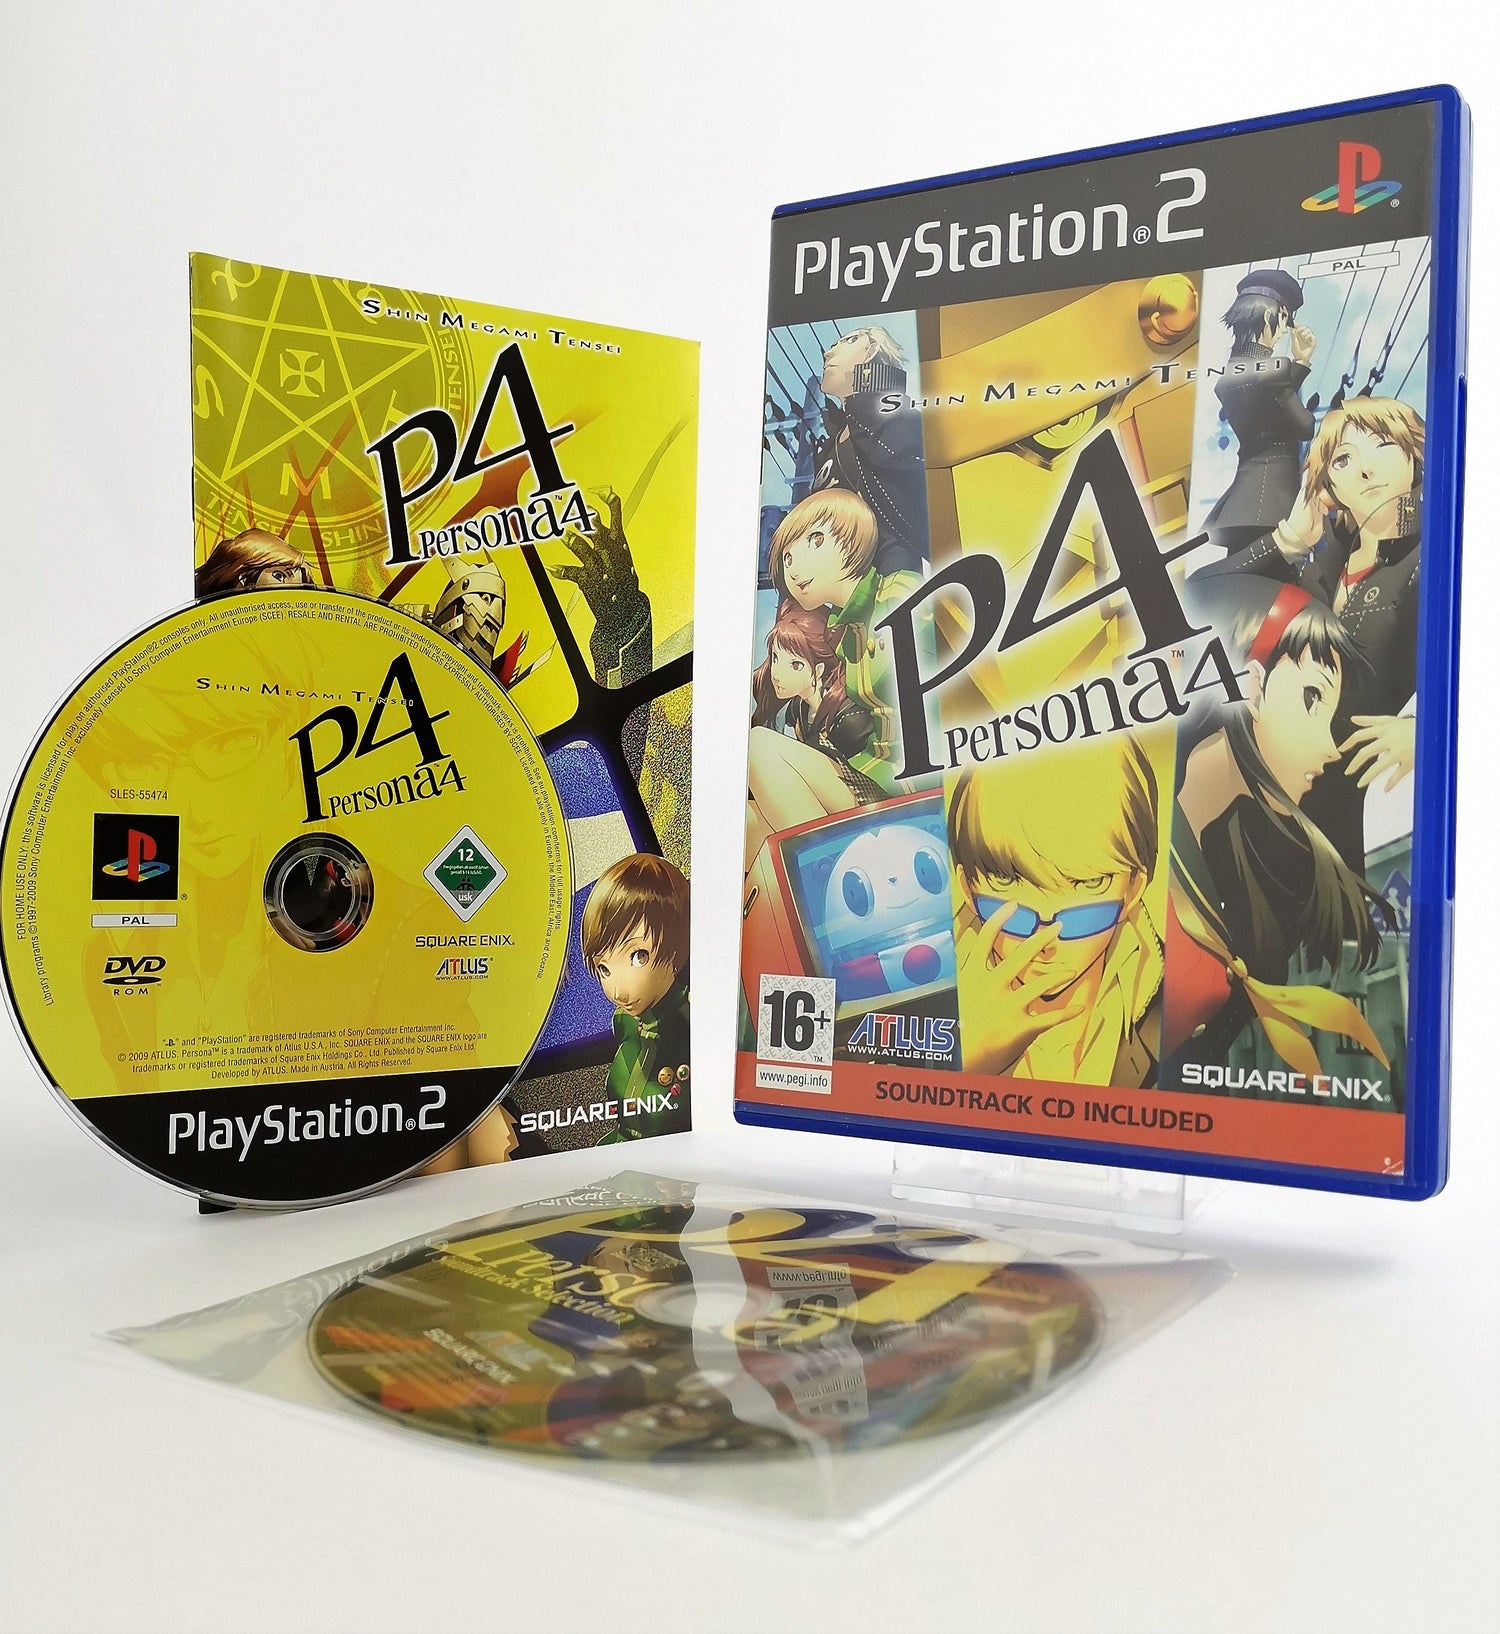 Sony Playstation 2 Game: Shin Megami Tensei P4 Persona 4 + Sound Track CD - PS2